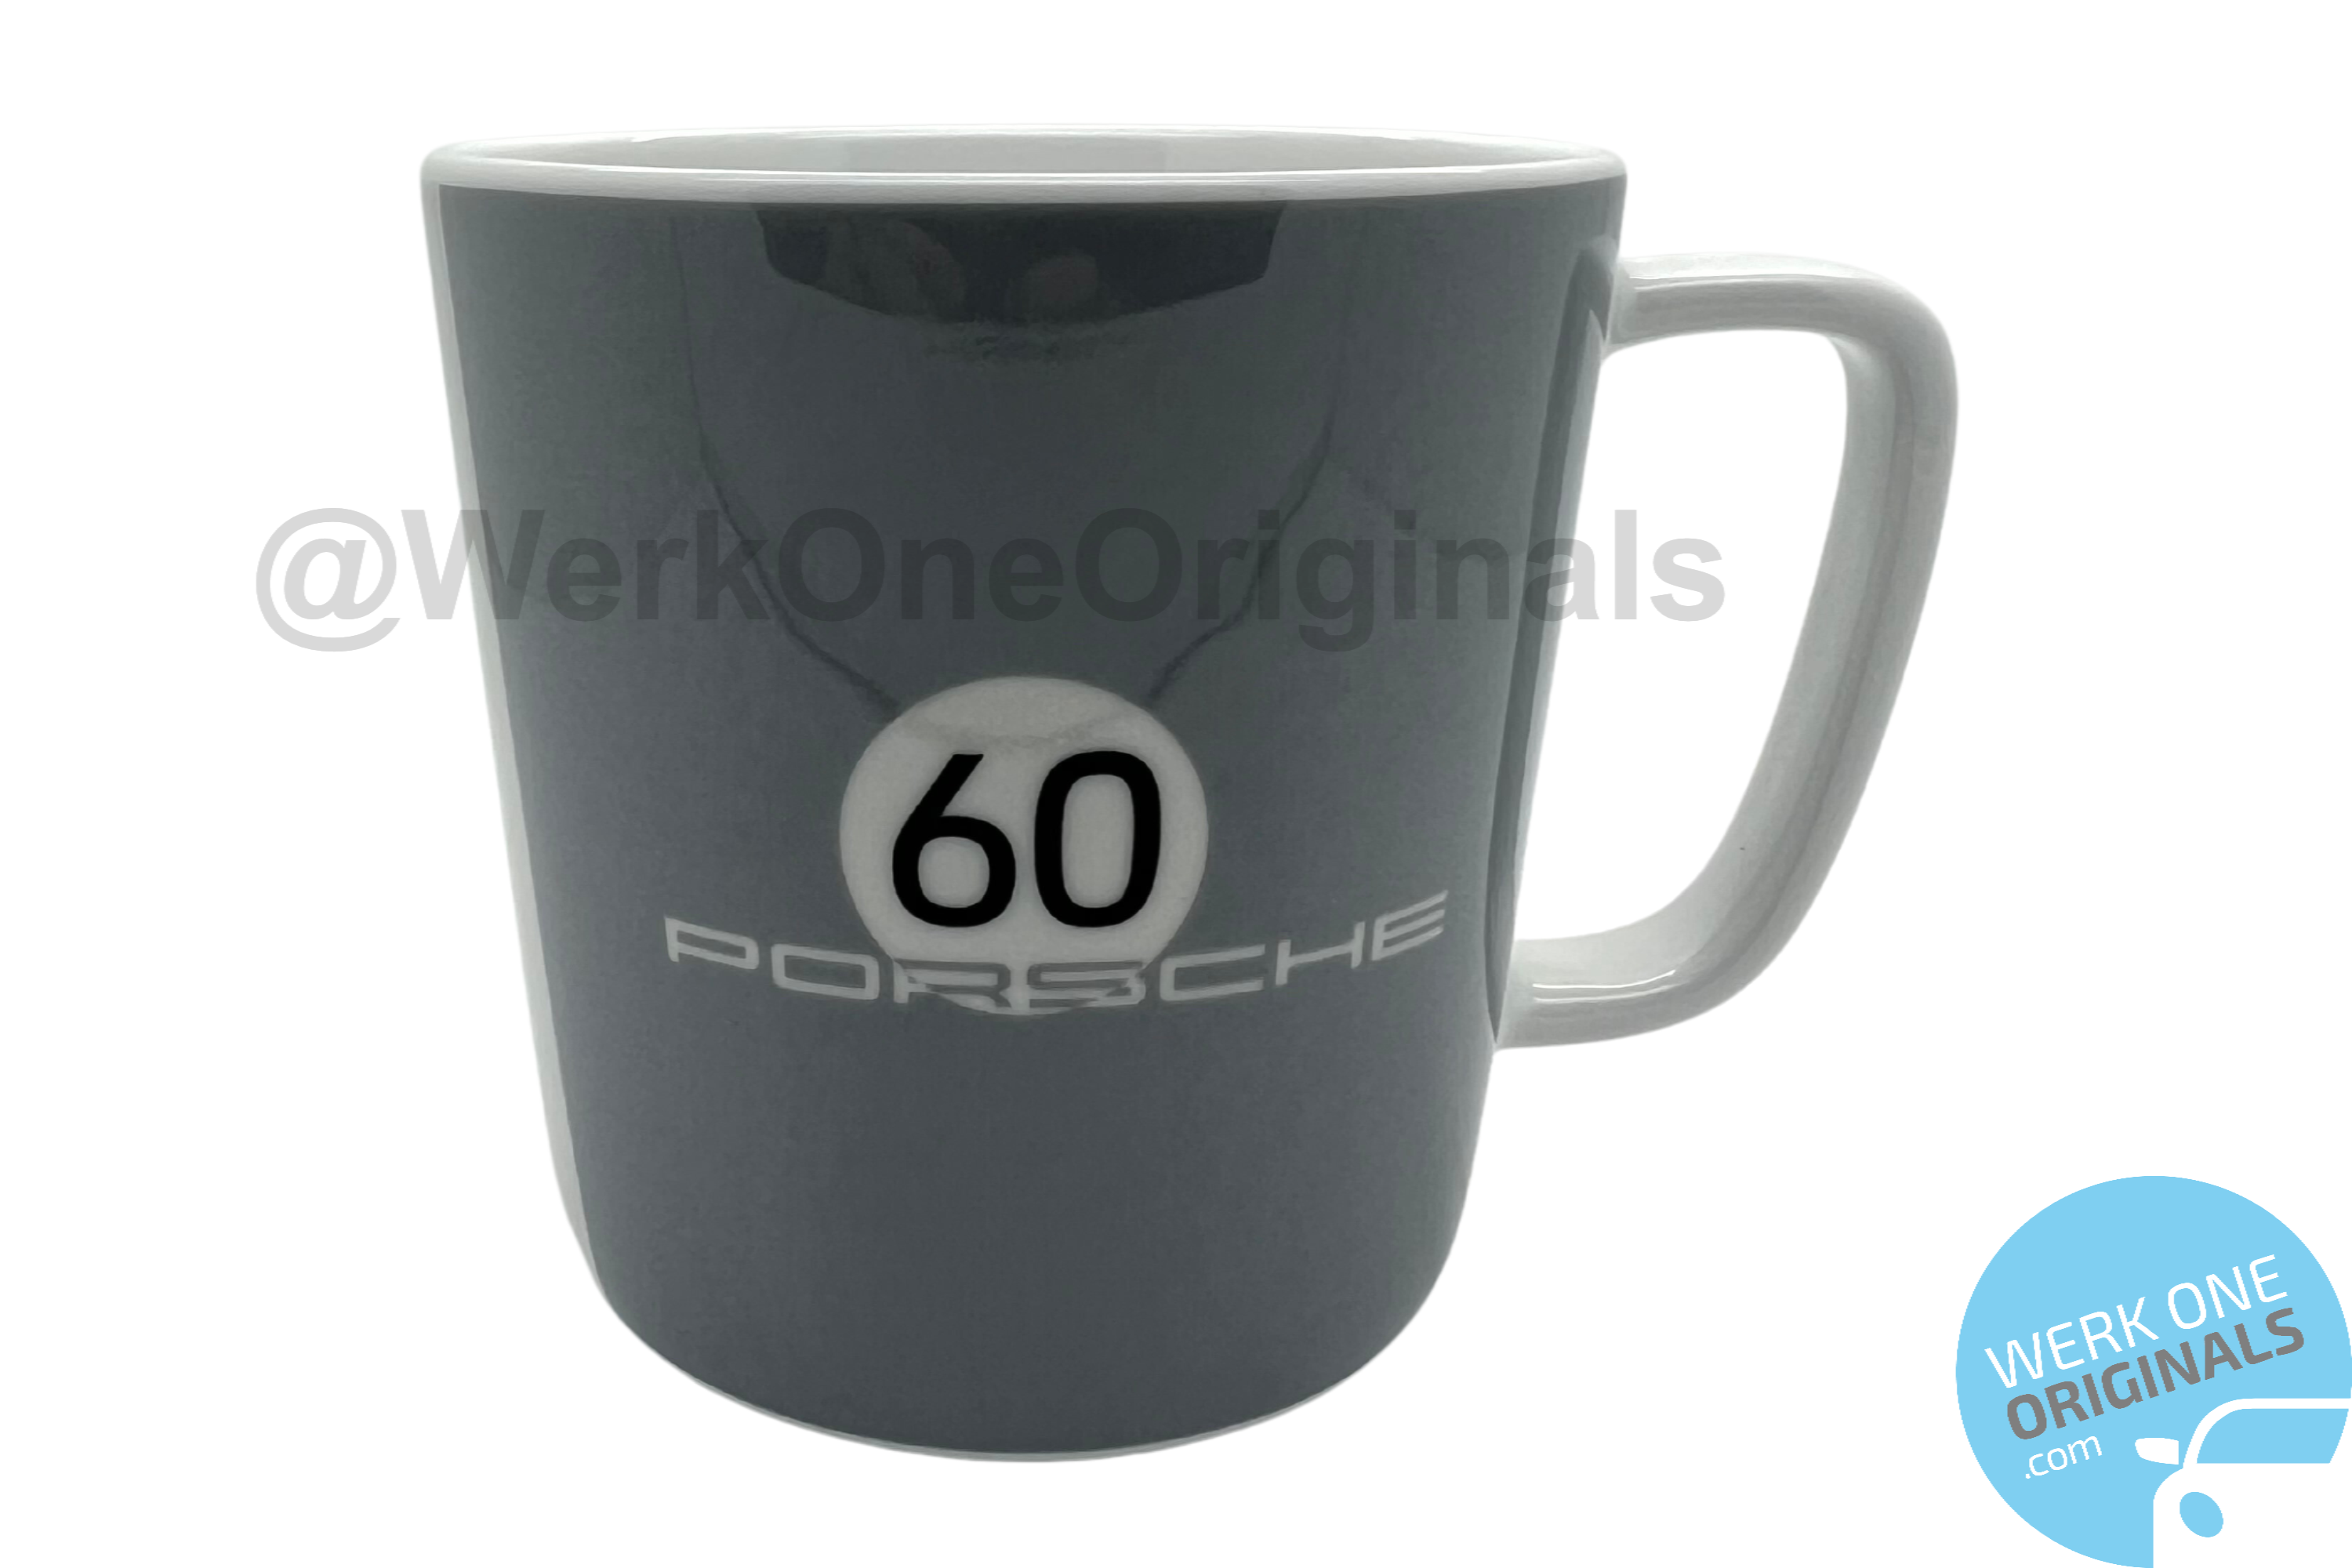 Official Porsche Collectors Cup No.2 - Heritage Livery Mug - 500ml